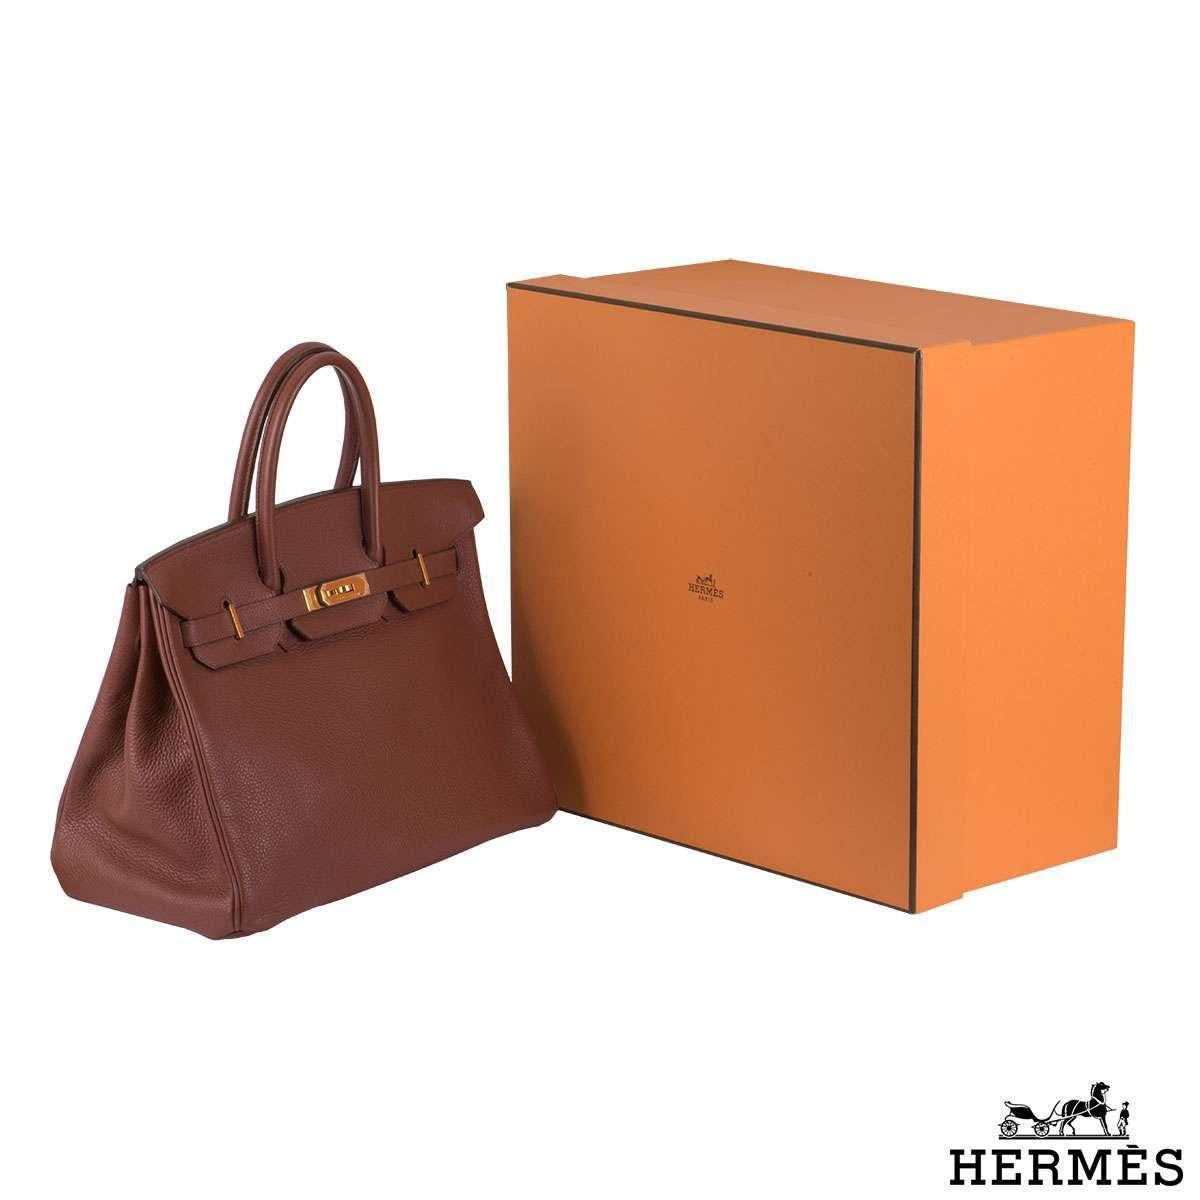 Women's Hermes Birkin 35cm Sienne Handbag